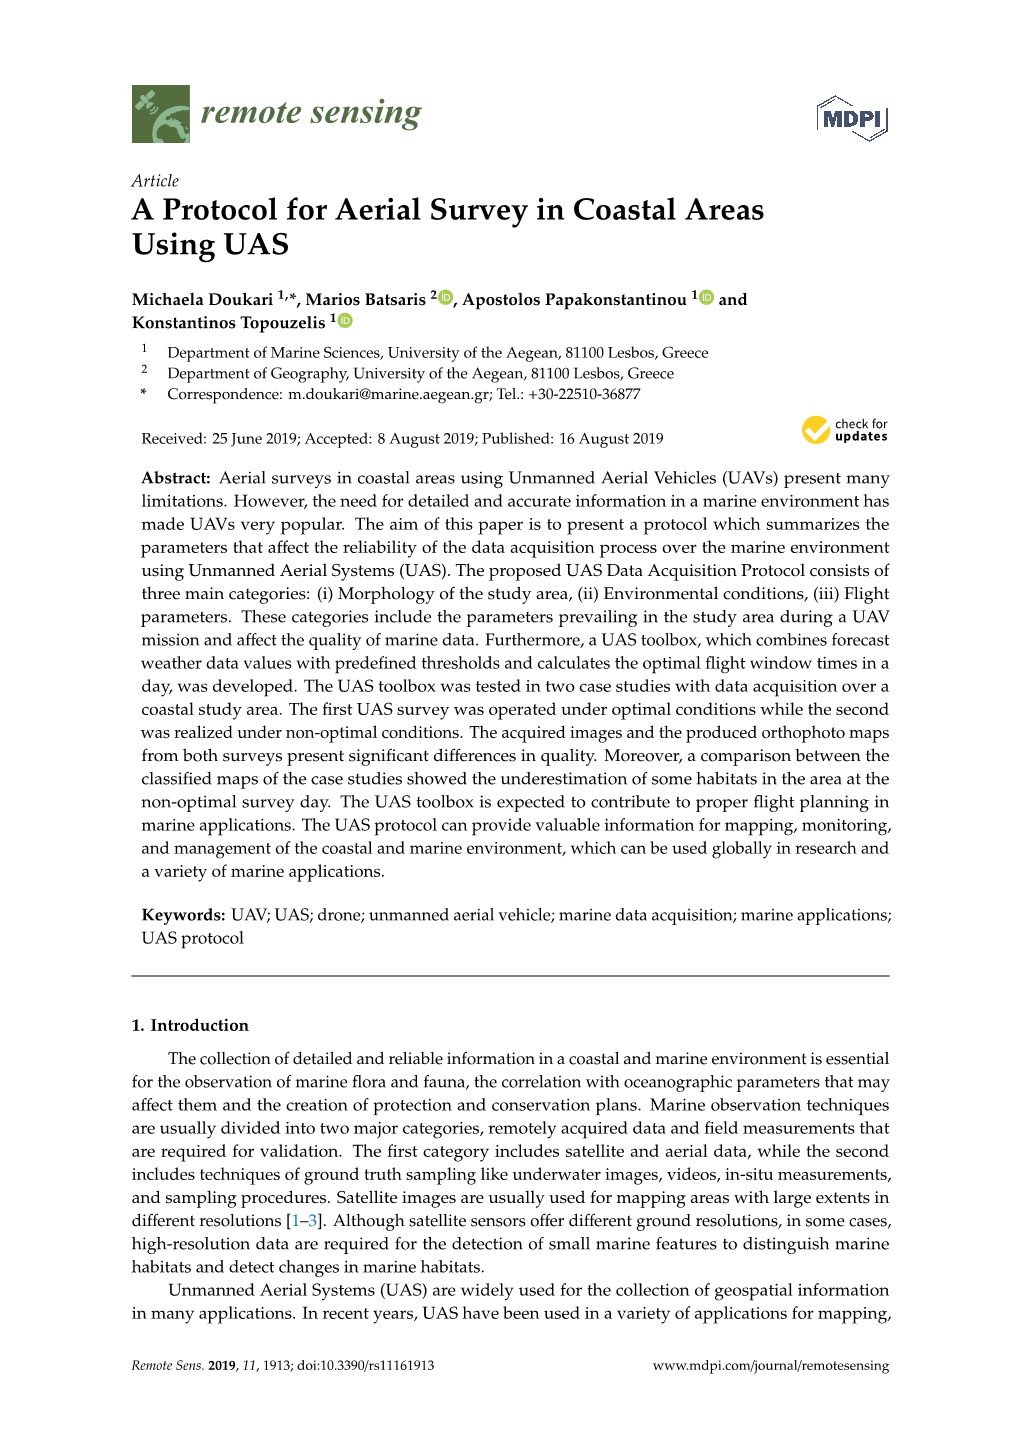 A Protocol for Aerial Survey in Coastal Areas Using UAS